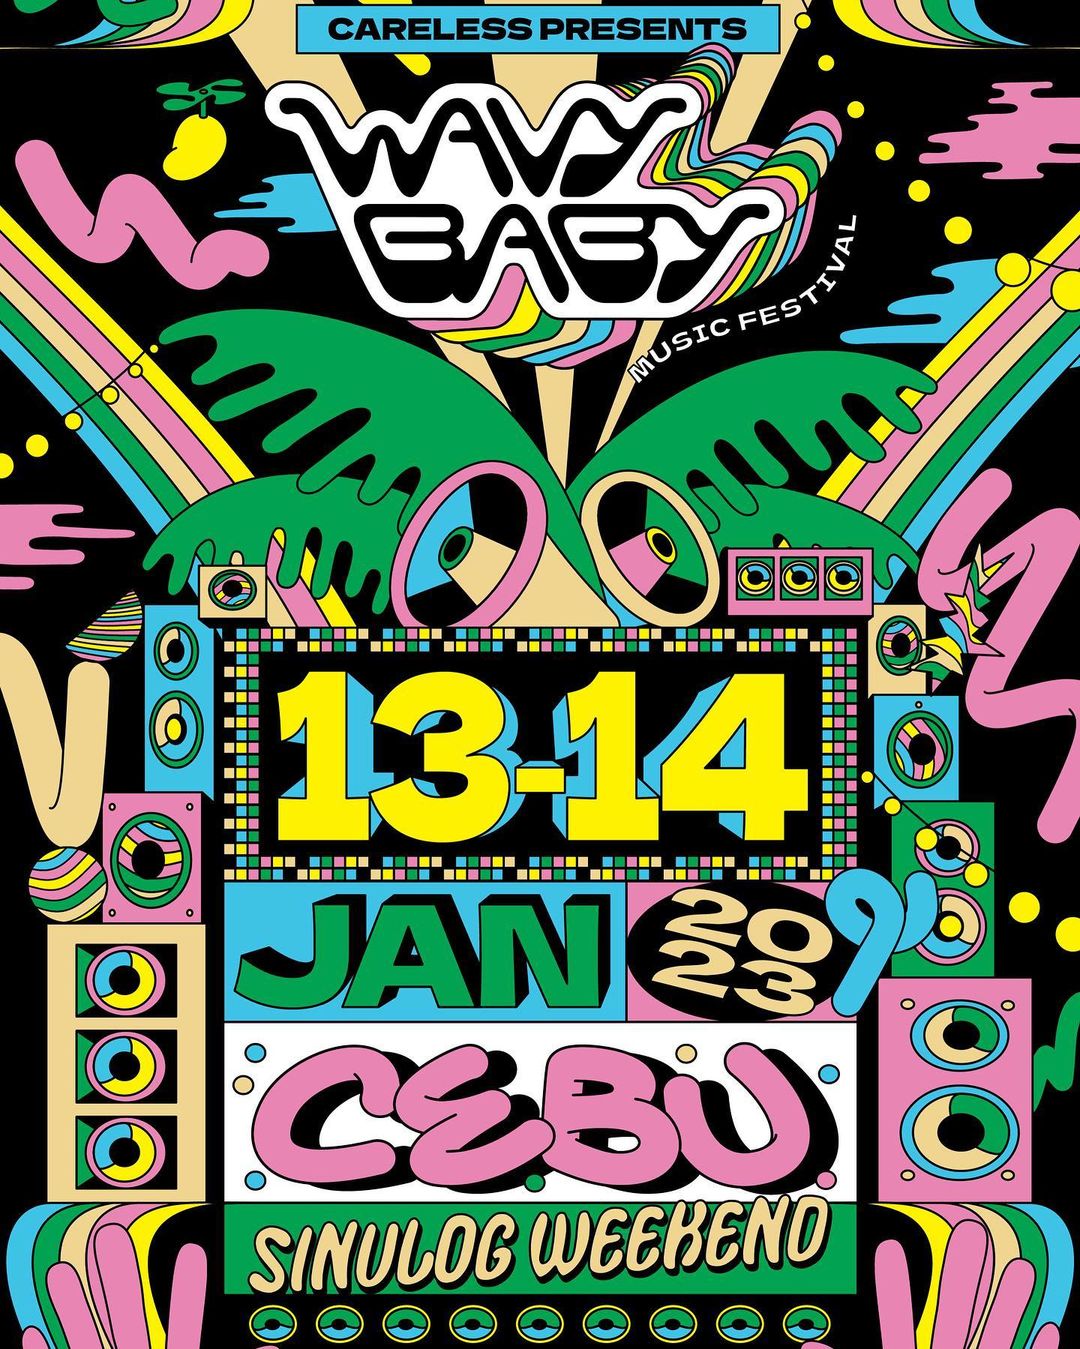 Wavy Baby Music Festival in January